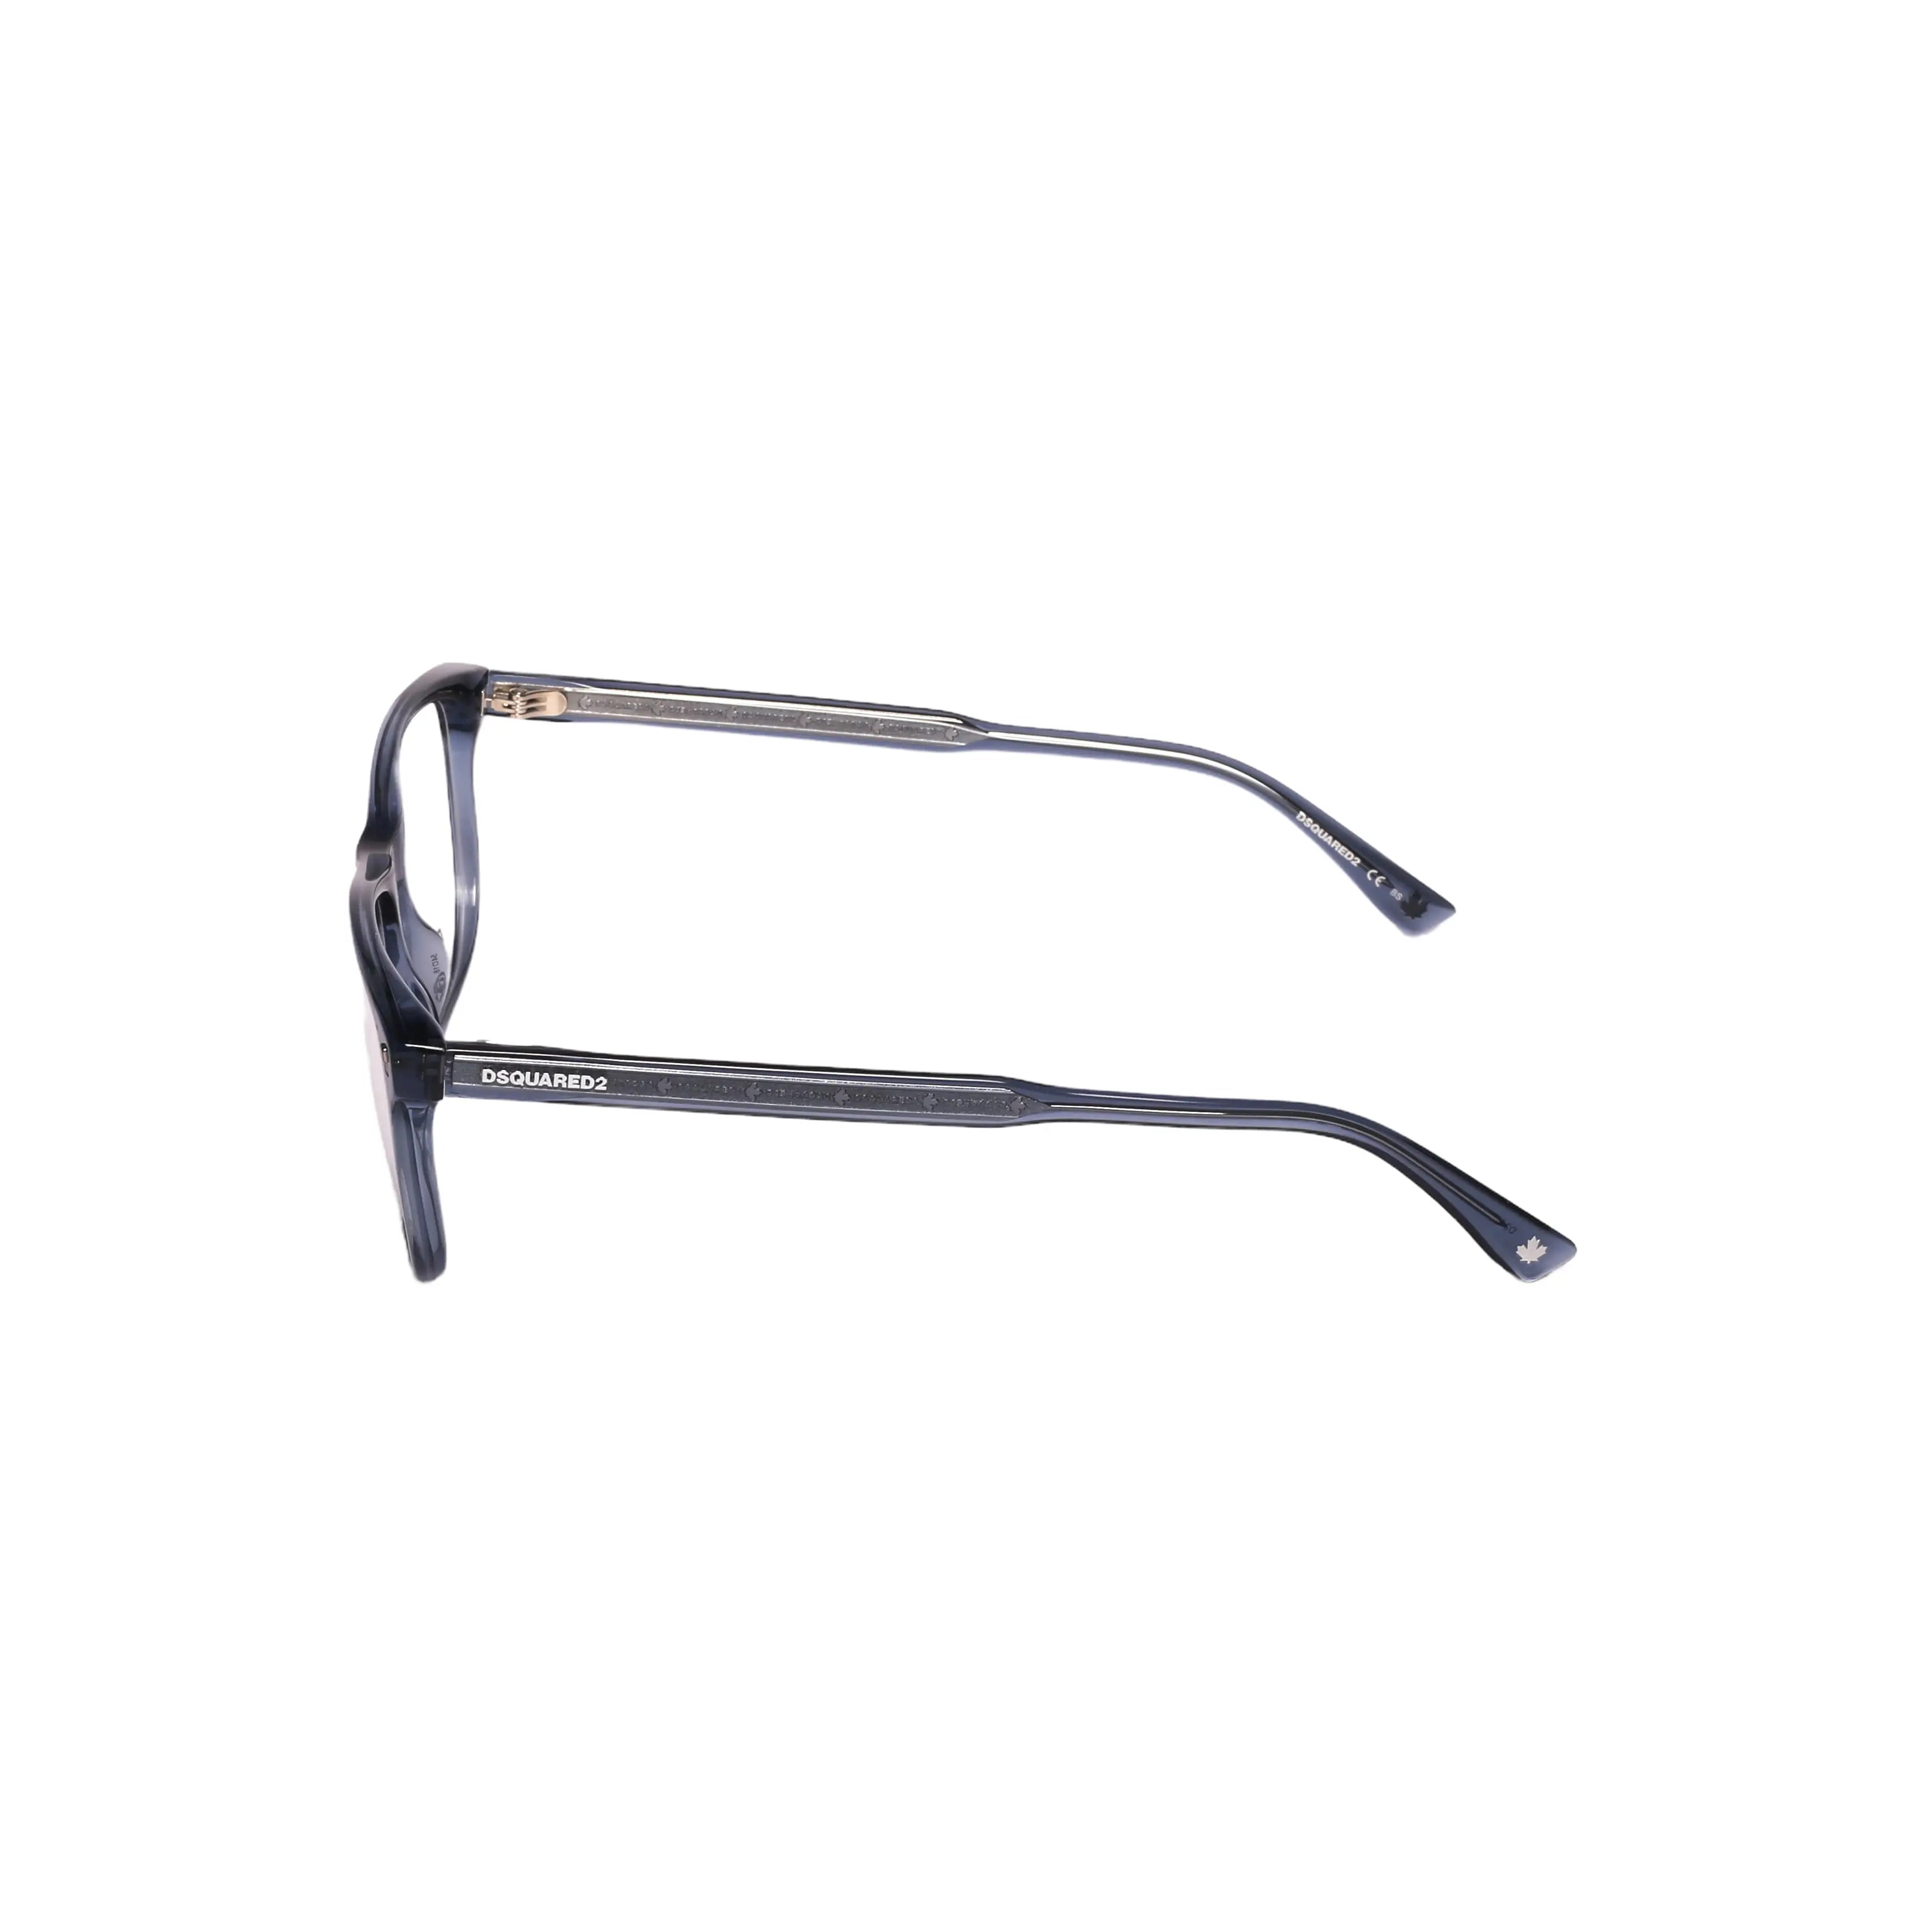 David Beckham-DB 0079-54-PJP-1 Eyeglasses - Premium Eyeglasses from David Beckham - Just Rs. 16900! Shop now at Laxmi Opticians